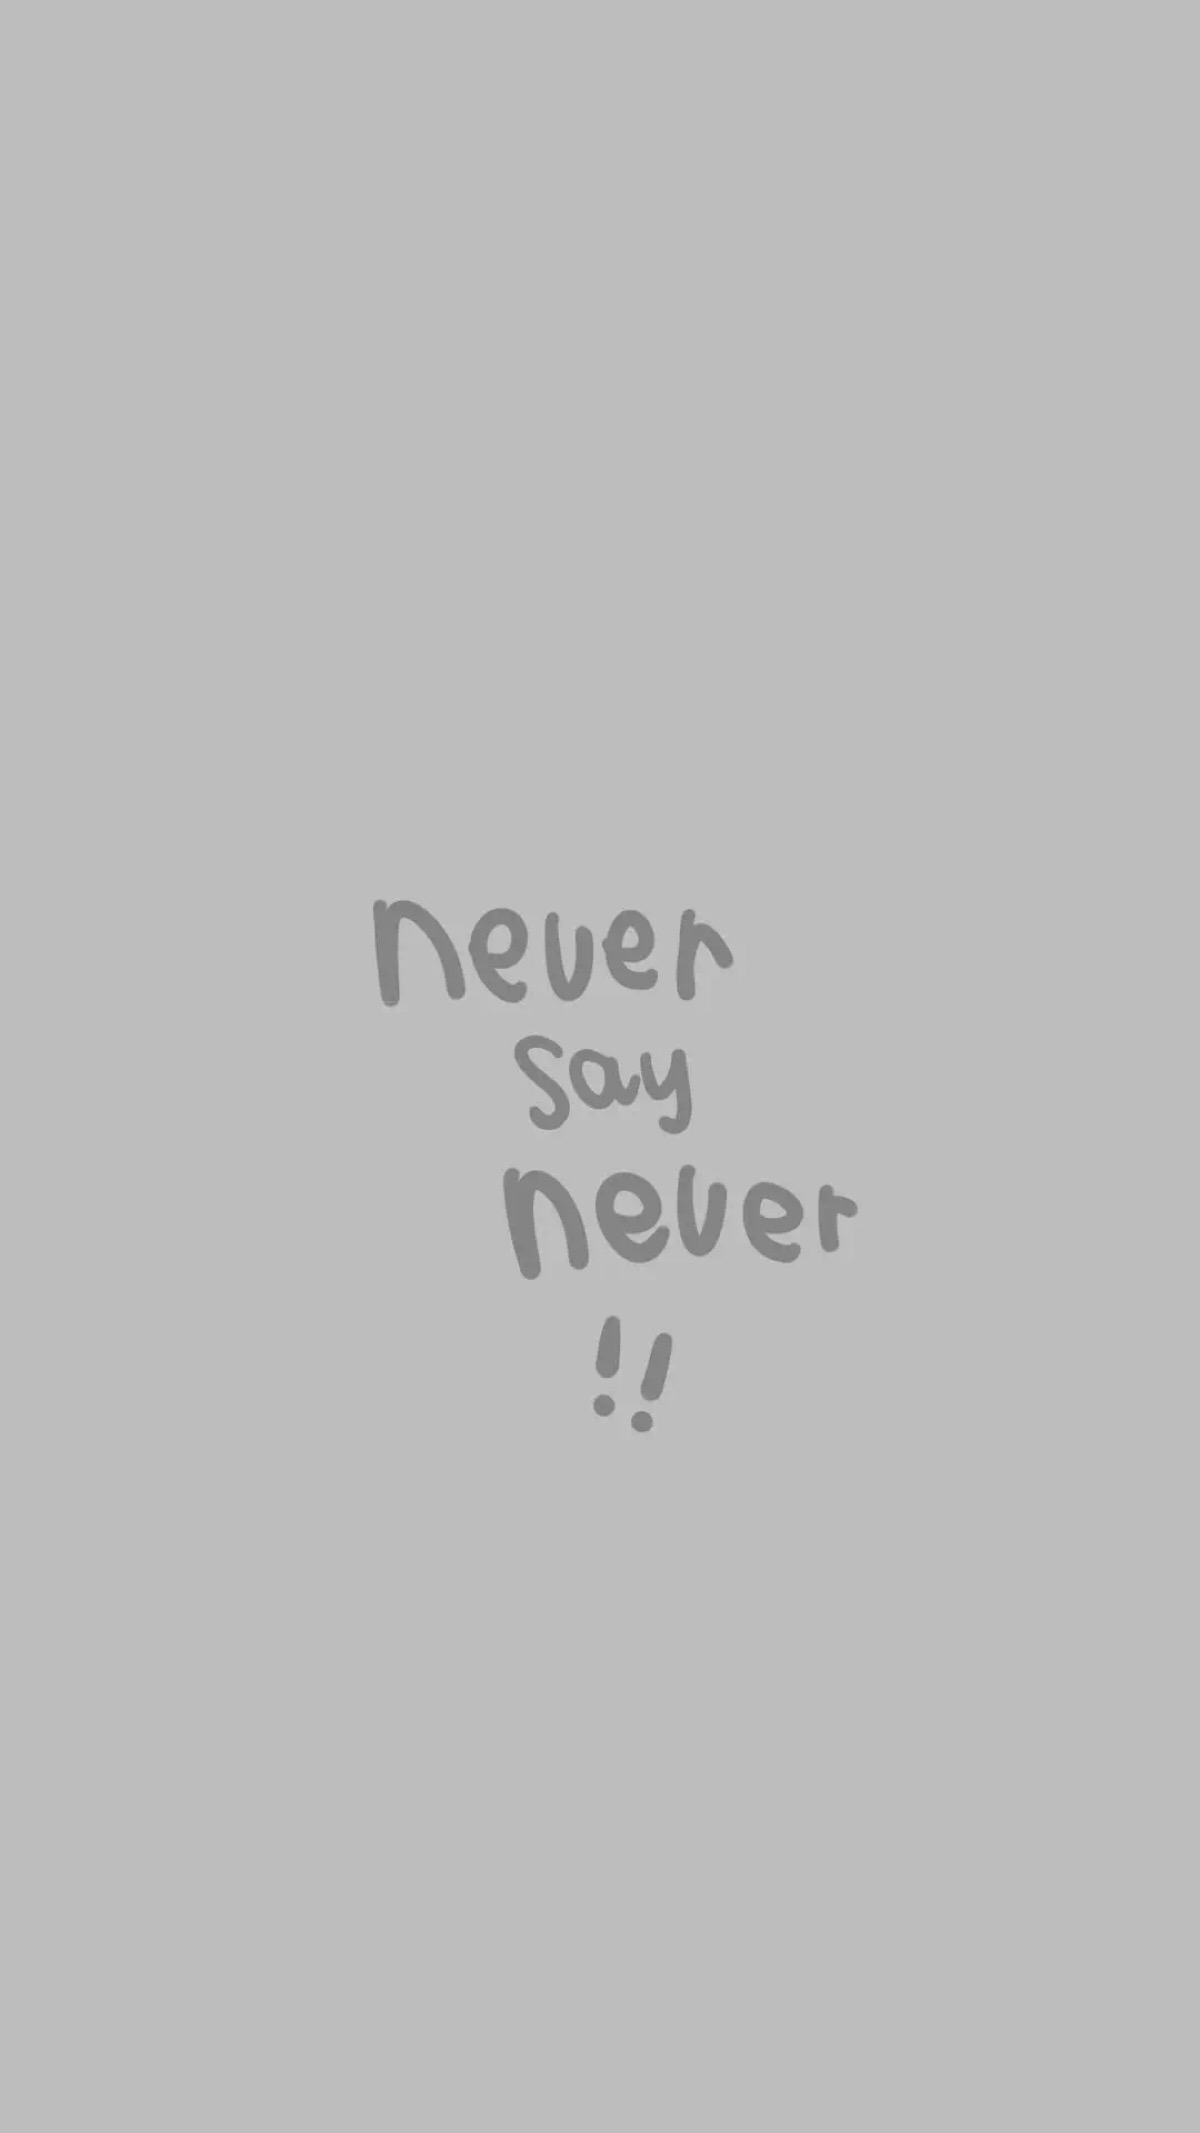 from晚安荼蘼 手写句子 文字壁纸 锁屏 励志 never say never